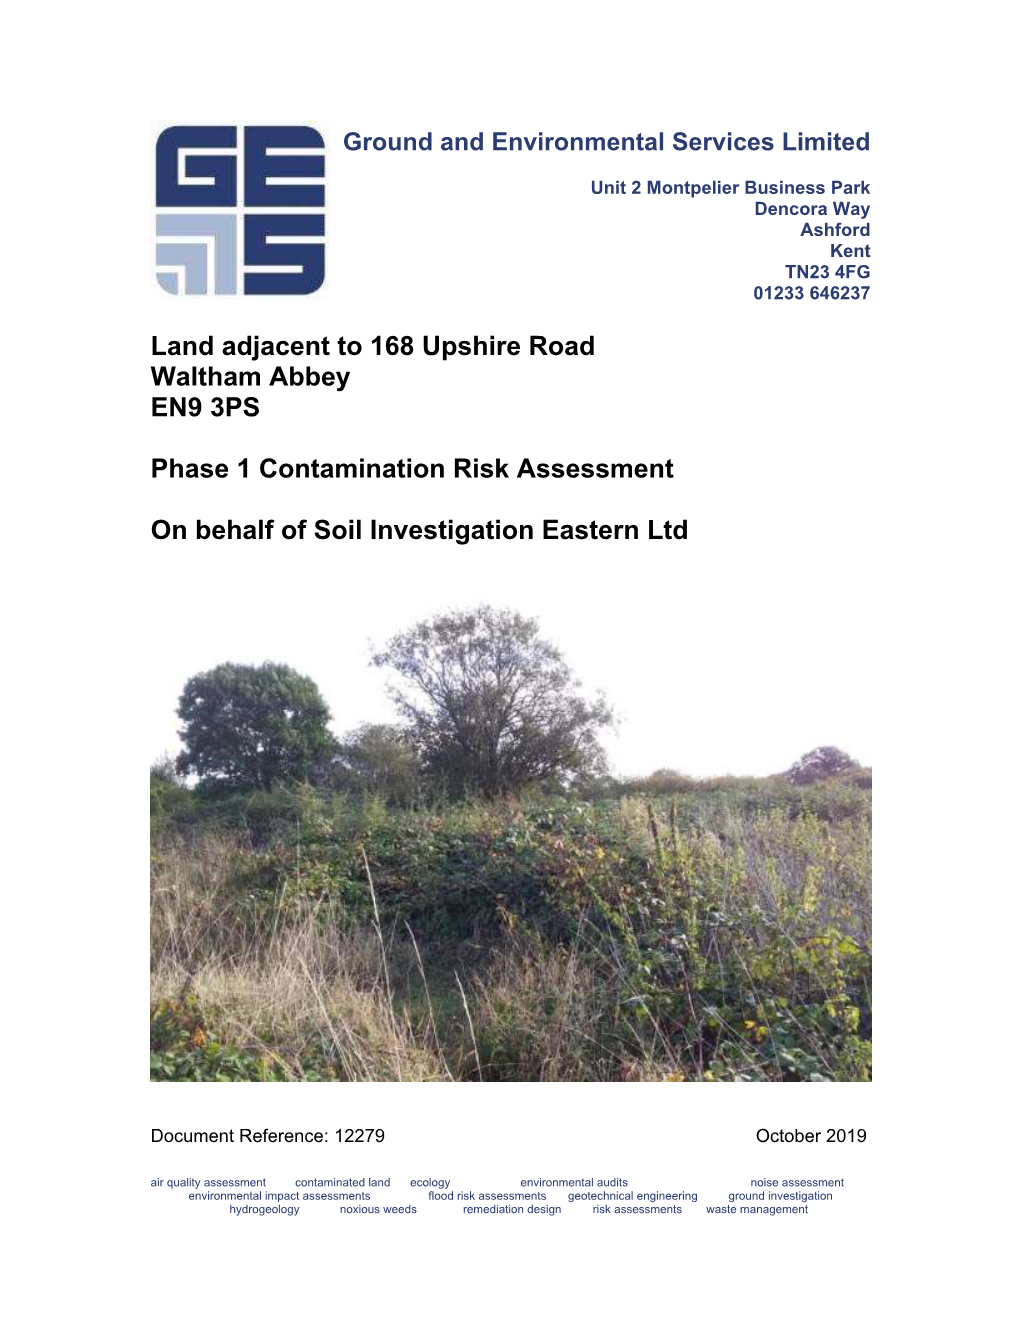 Land Adjacent to 168 Upshire Road Waltham Abbey EN9 3PS Phase 1 Contamination Risk Assessment on Behalf of Soil Investigation Ea